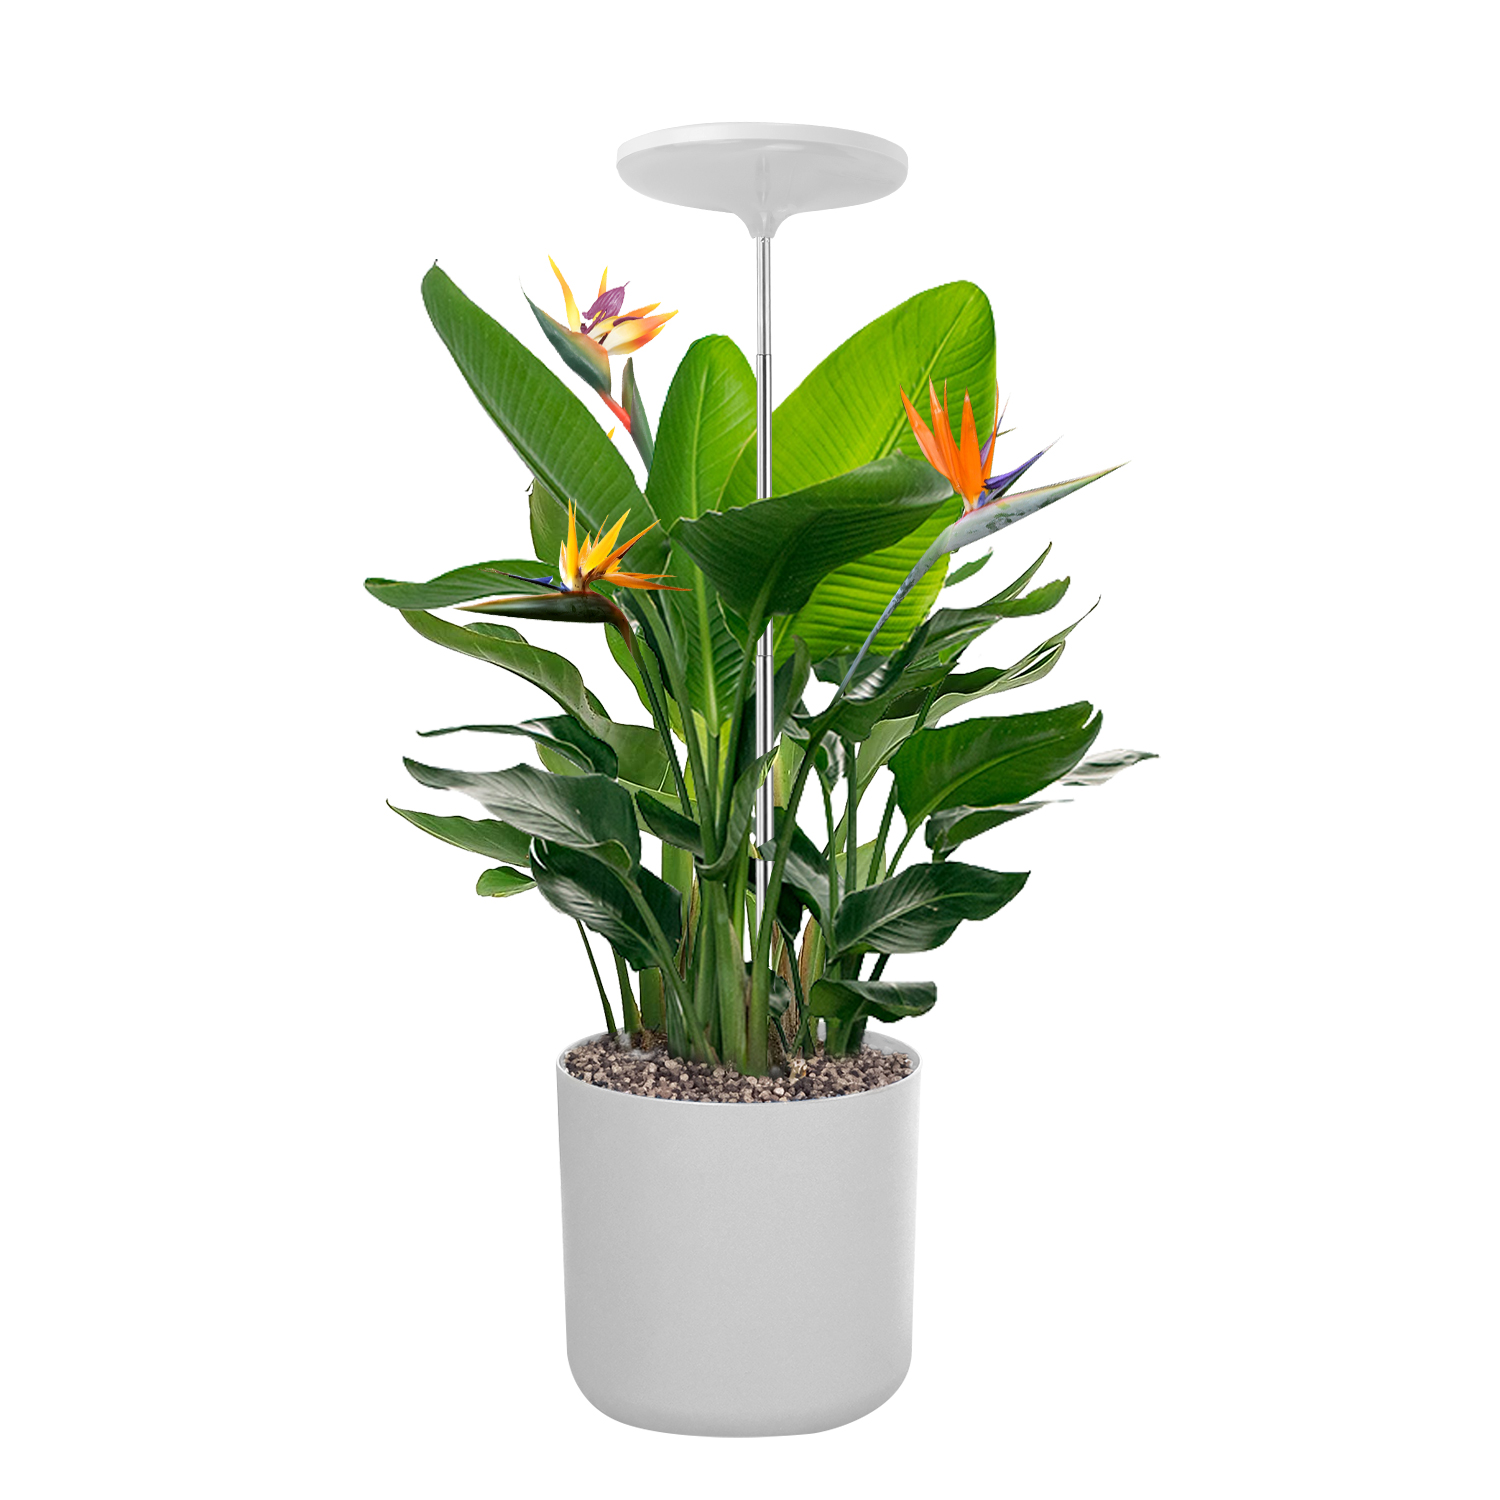 TG004 Indoor Smart Plant Grow Light Lamp Garden, Grow Lights, Light Plant Decorative